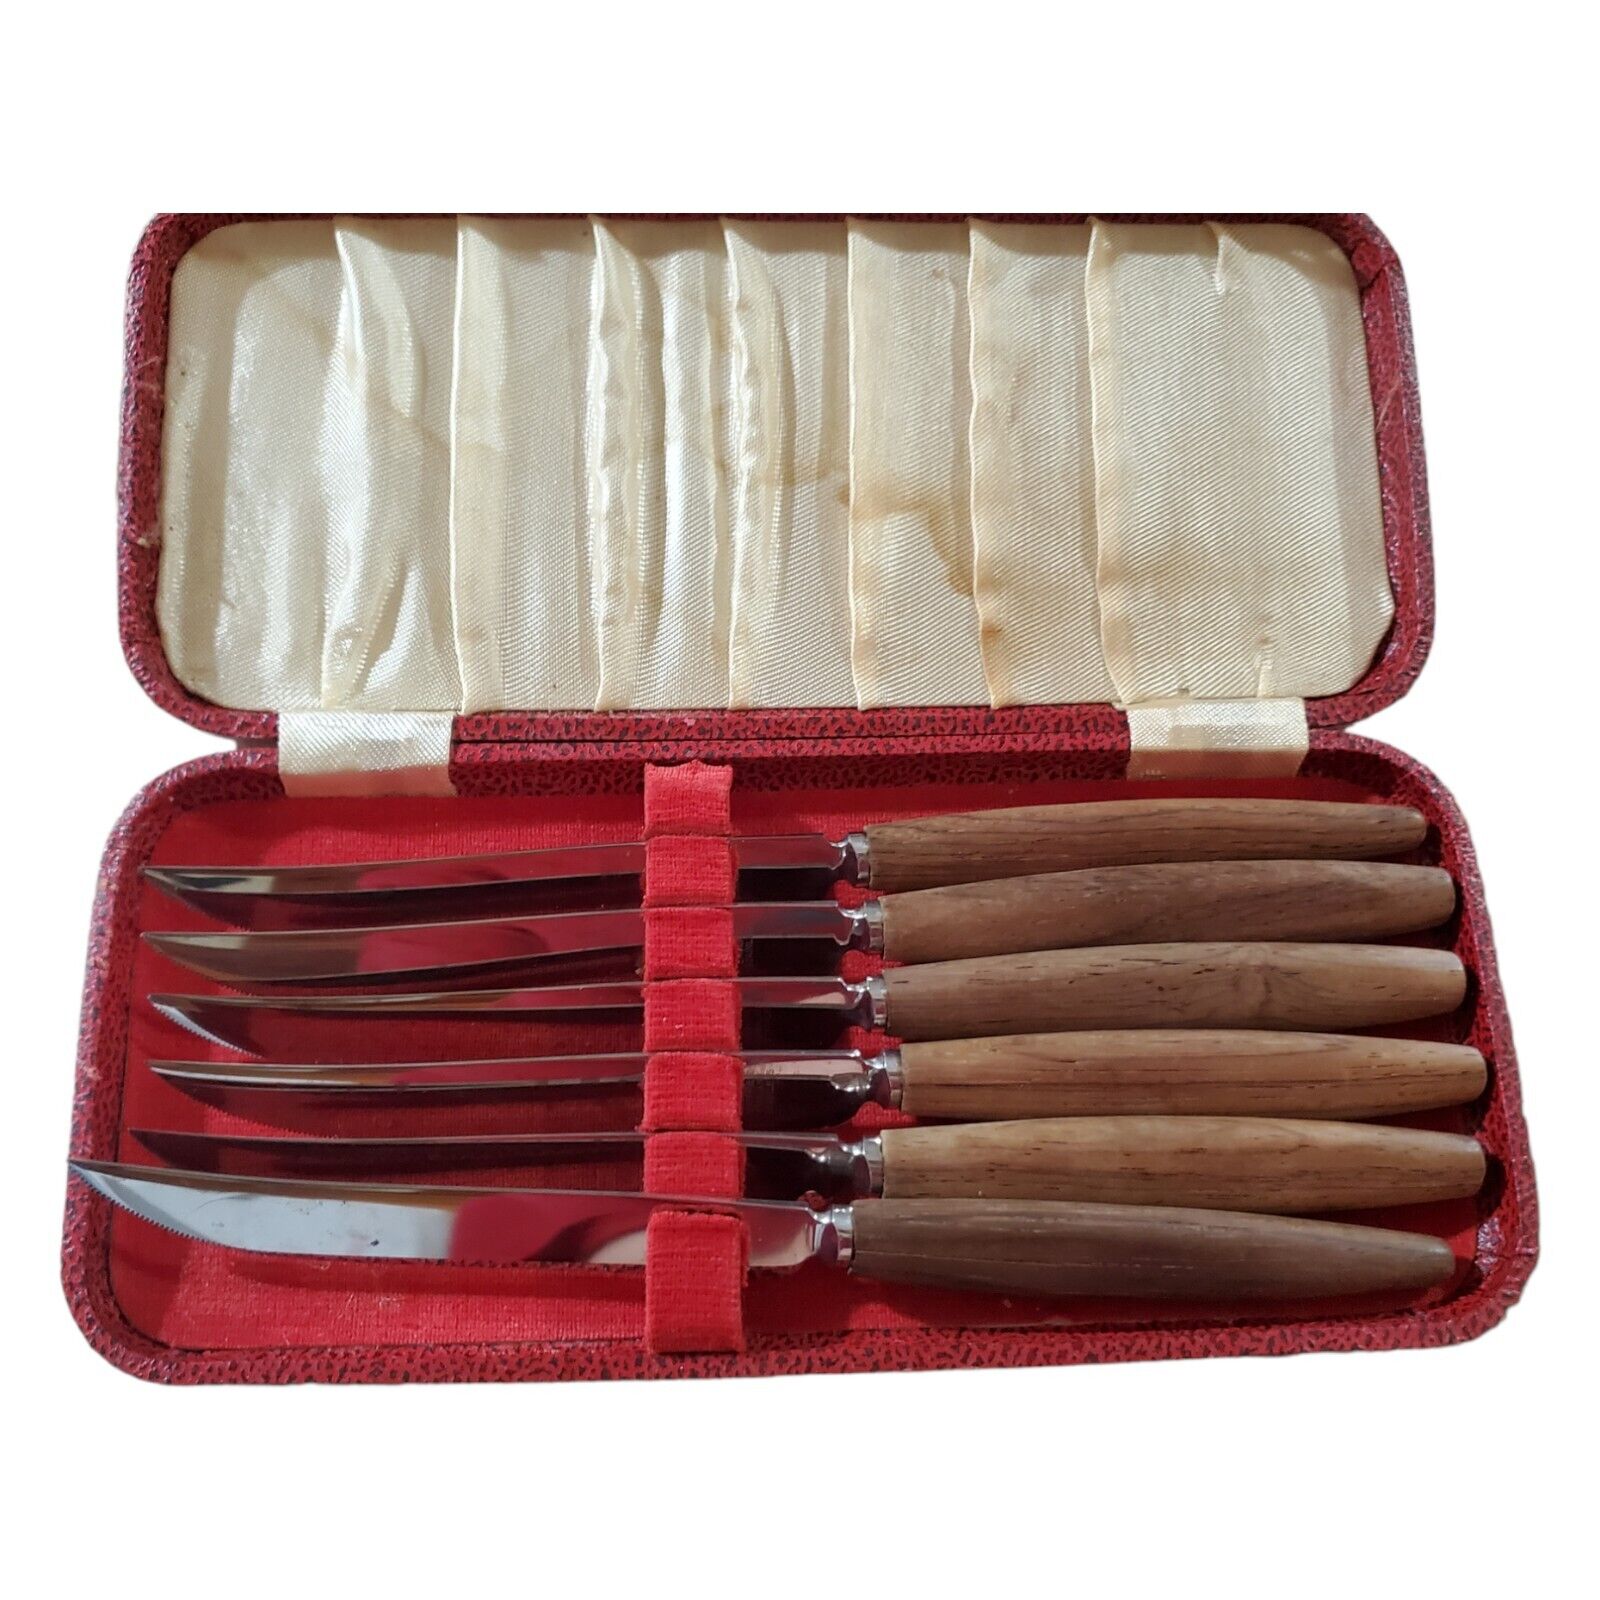 Cutlass Leppington Sheffield England Stainless Knife Set Wood Handle w/ Case